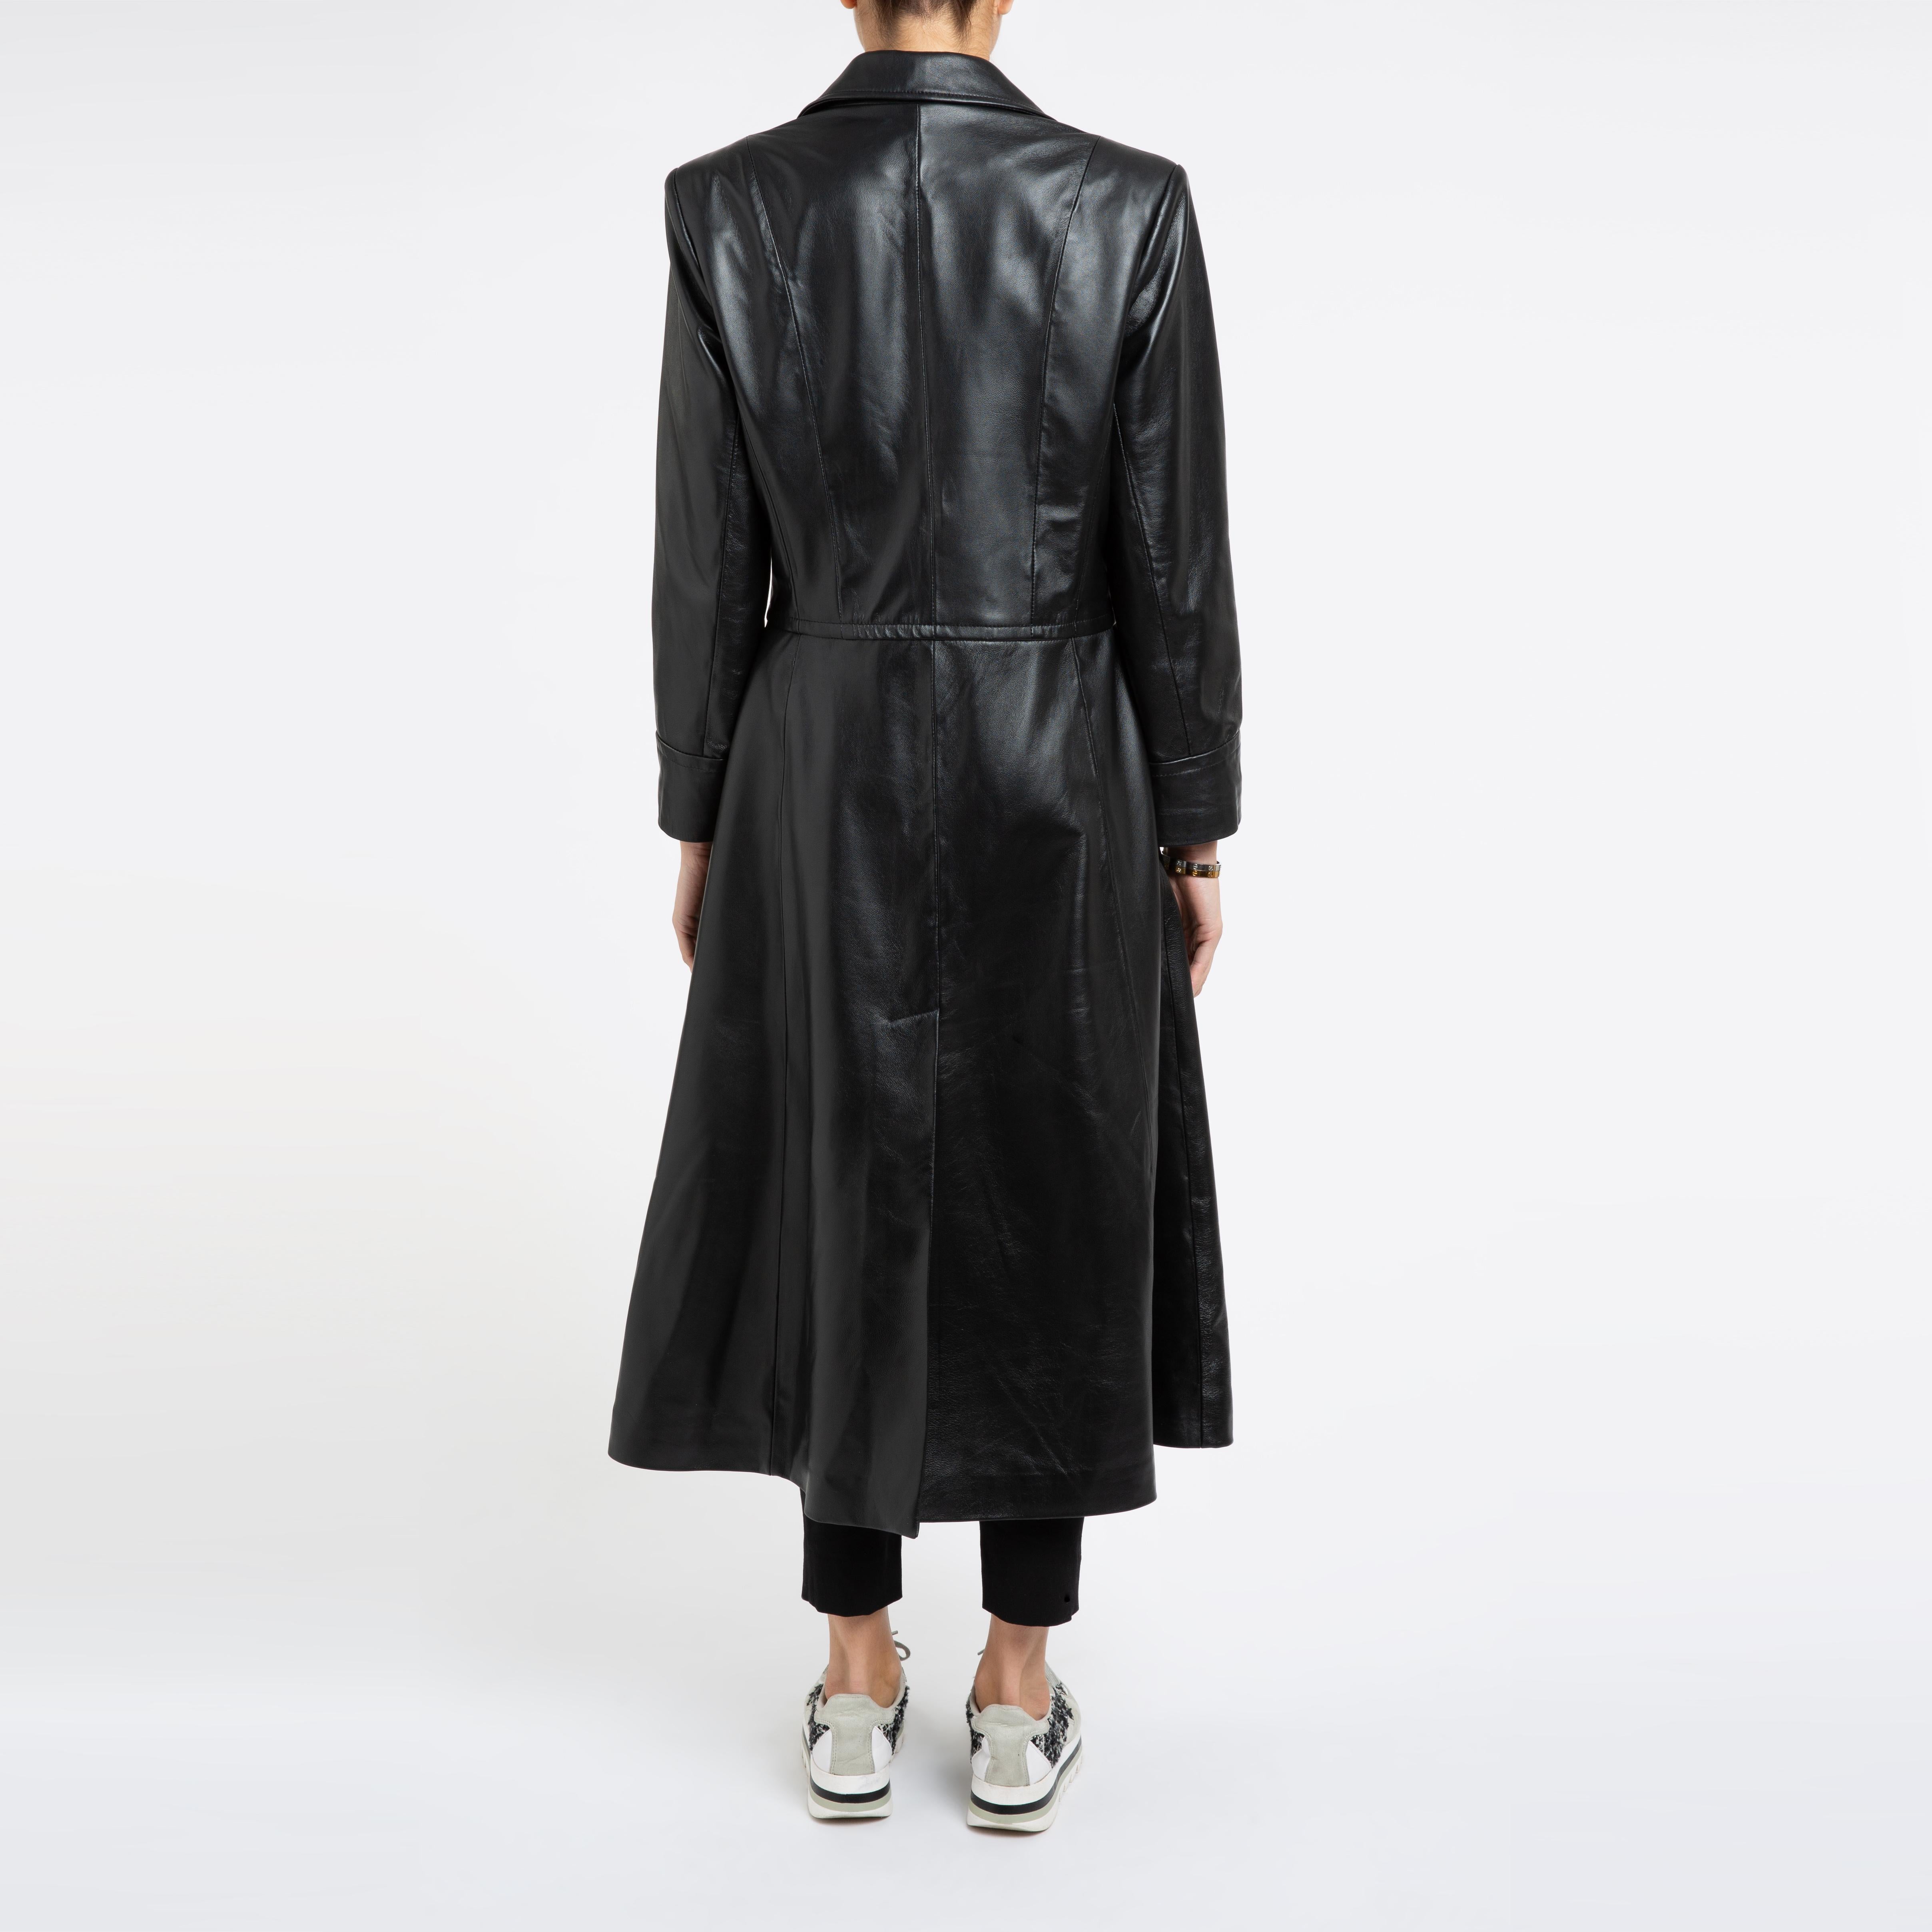 Verheyen London Oversize 70's Leather Trench Coat in Black - Size uk 12 For Sale 6